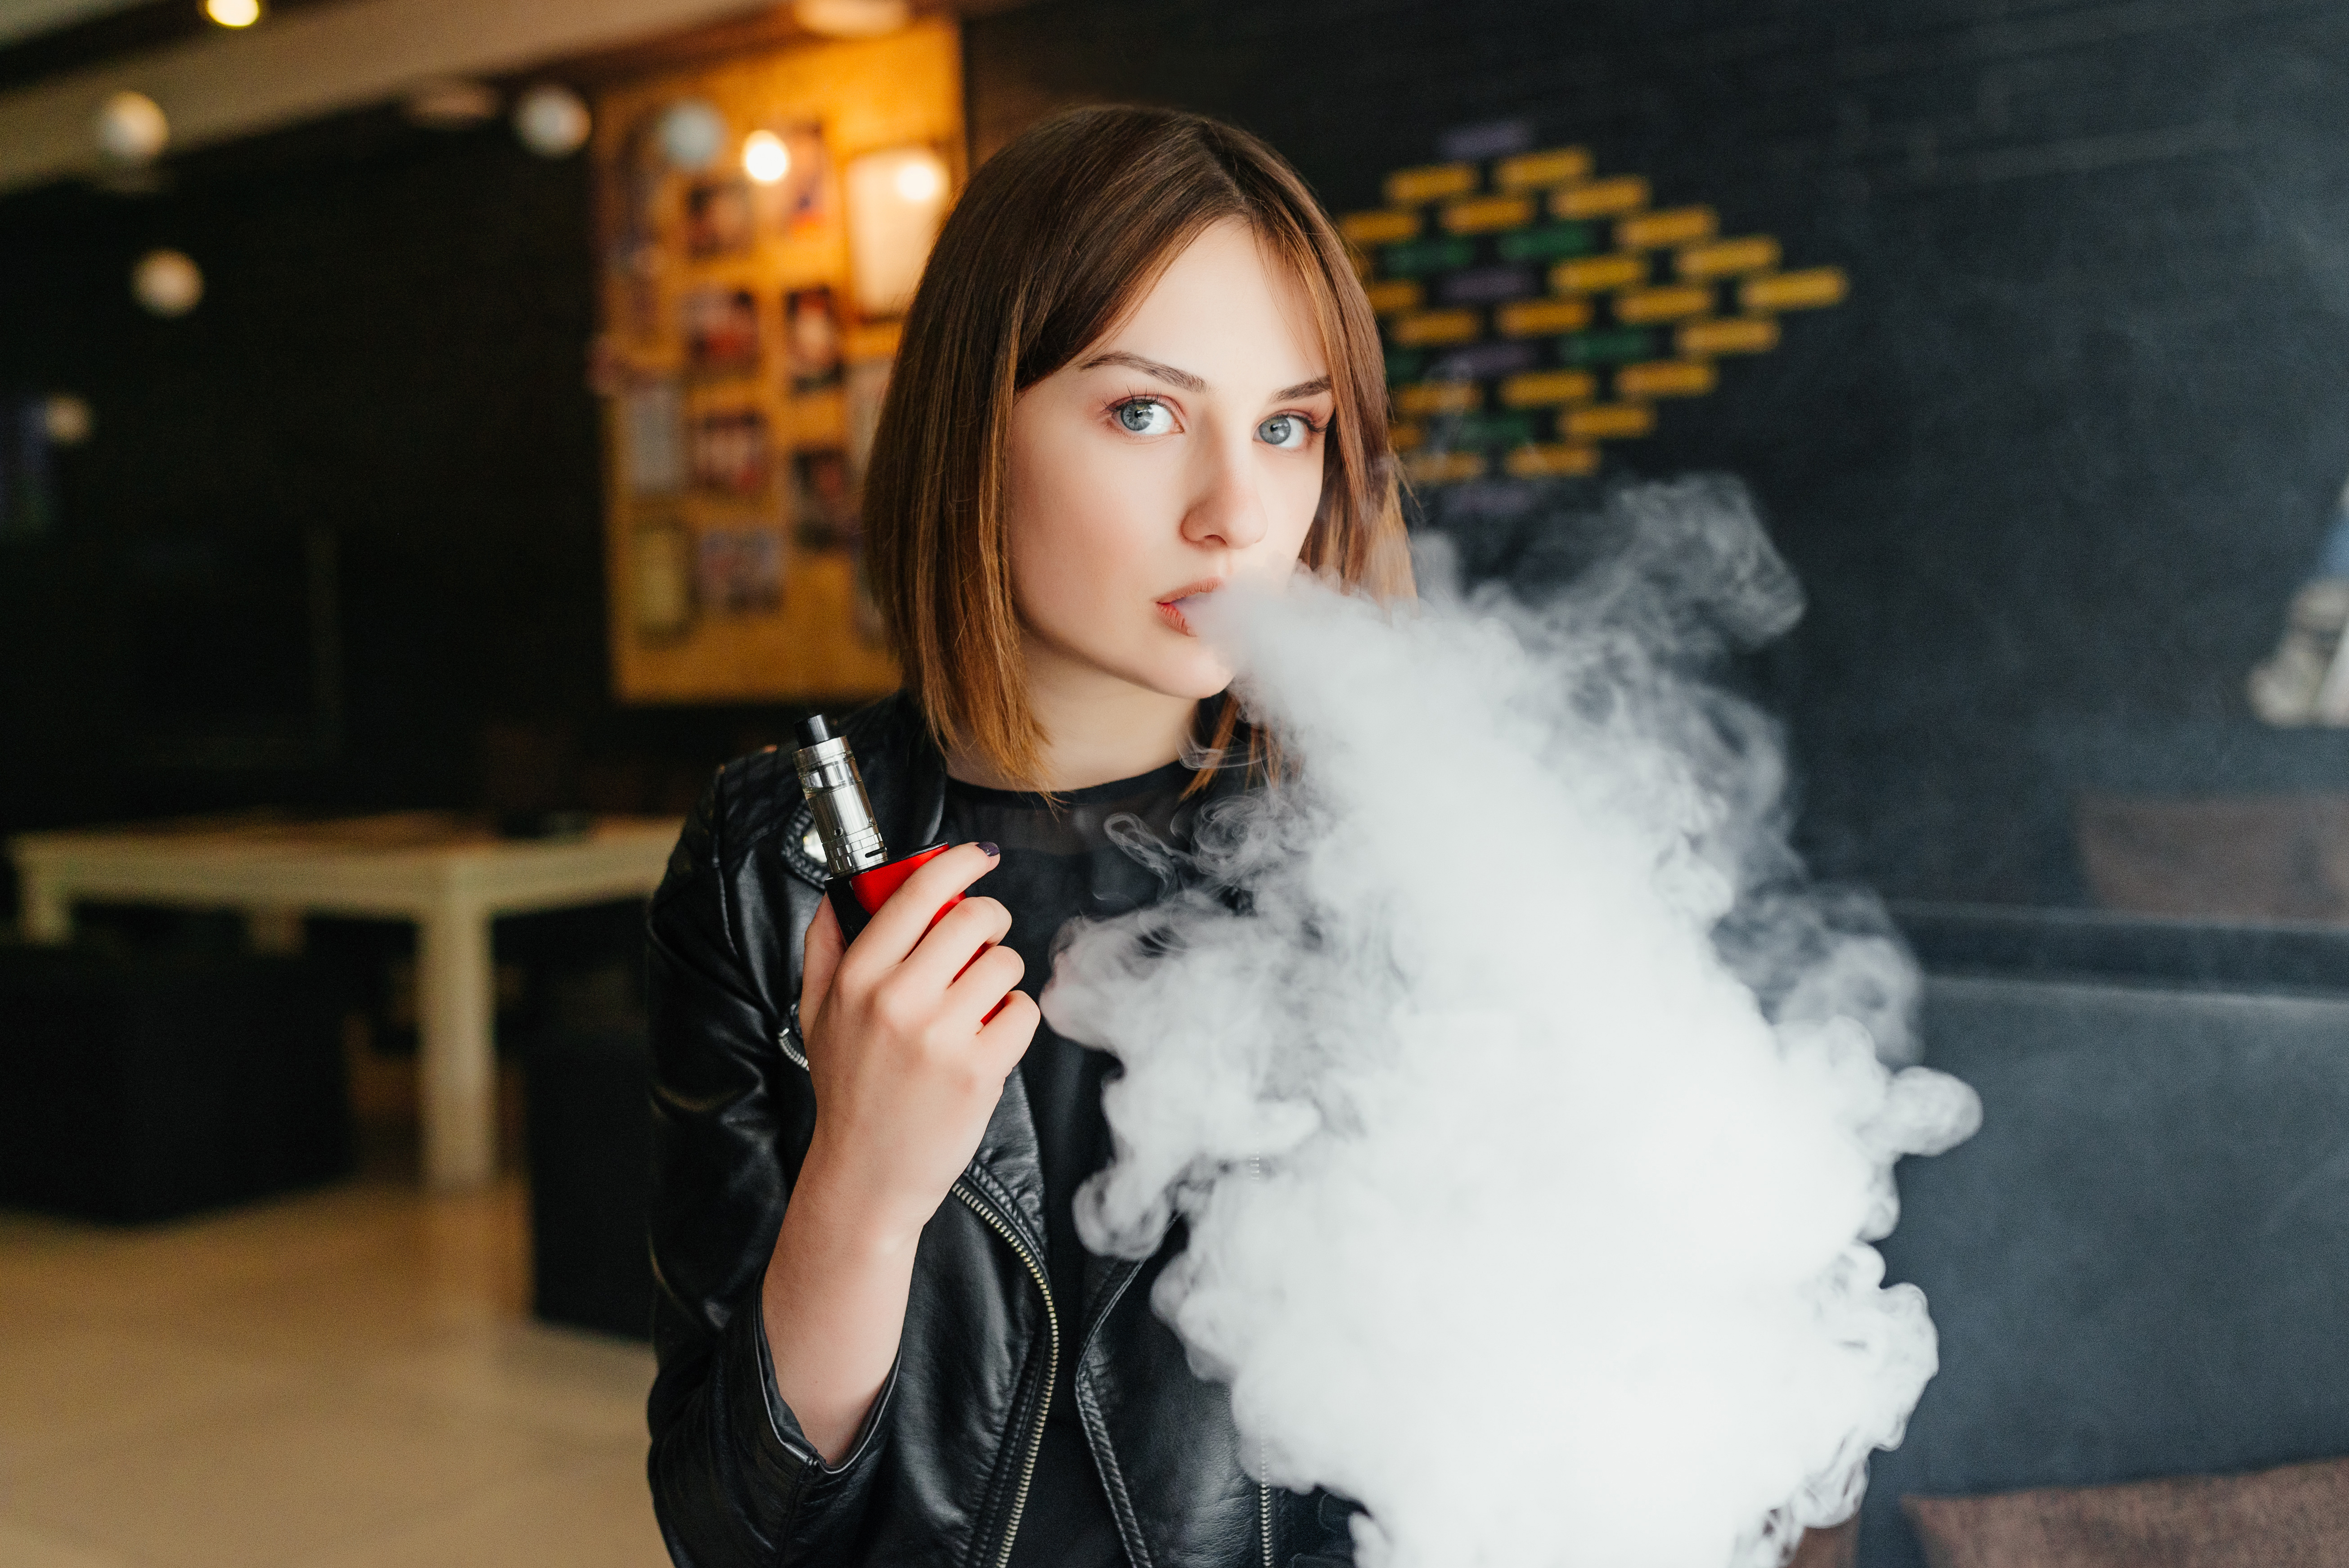 Girl possessing and smoking liquid nicotine